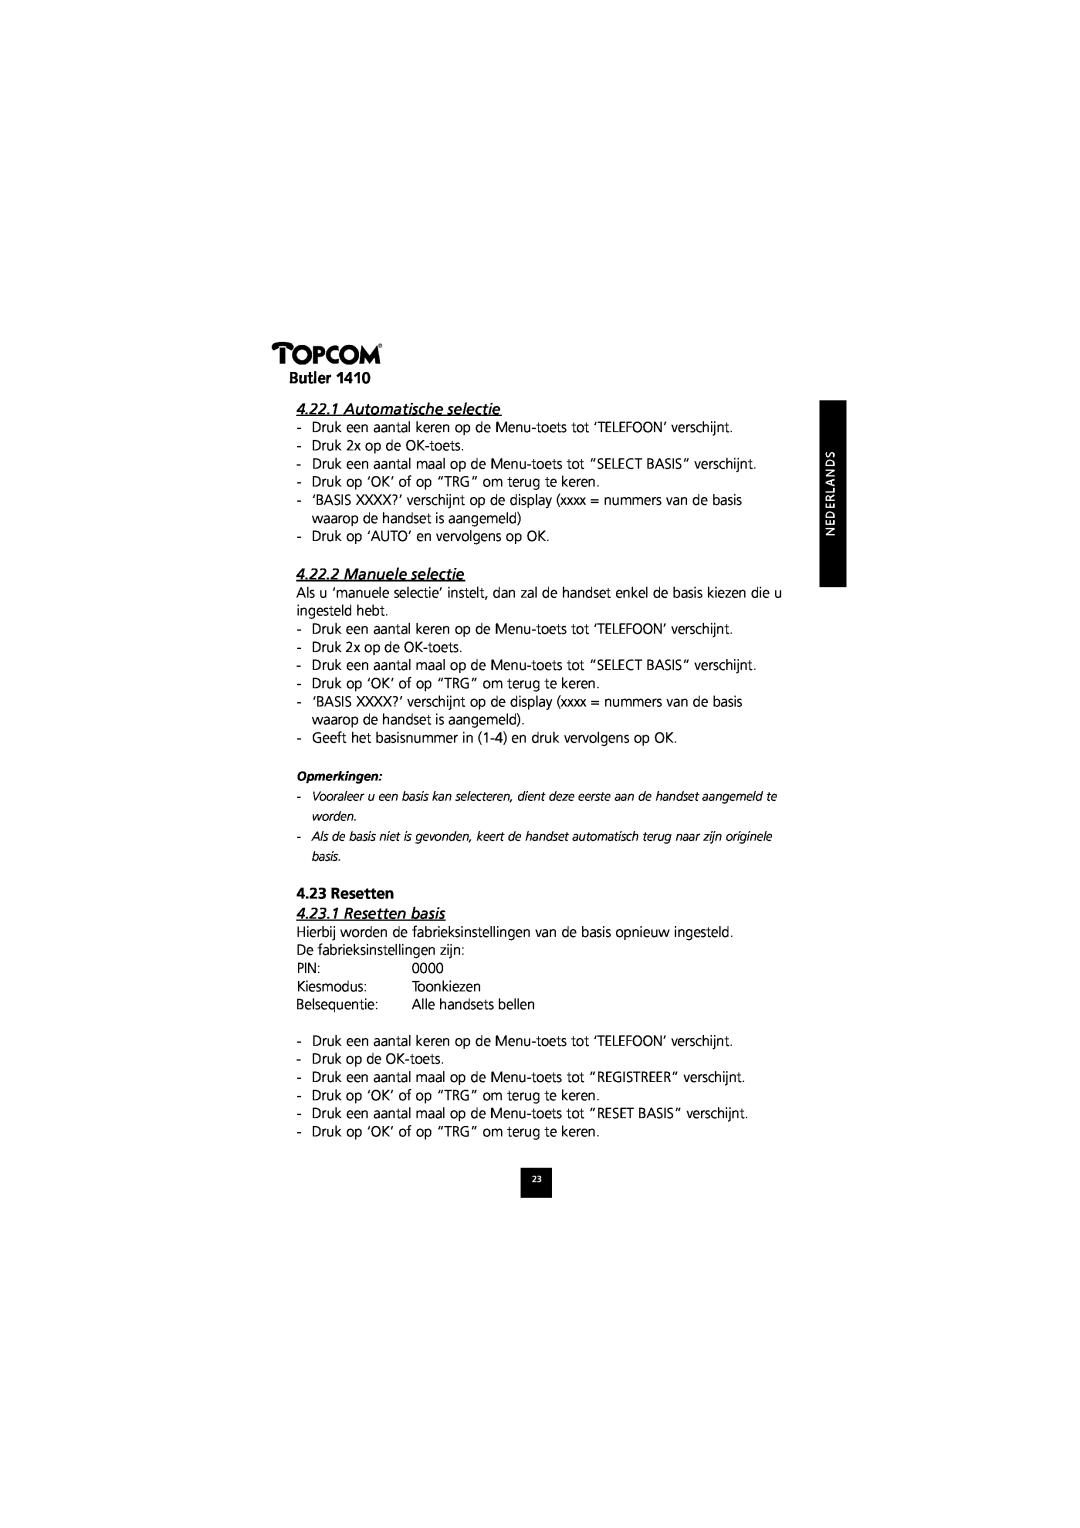 Topcom 1410 manual Automatische selectie, Manuele selectie, Resetten basis, Butler 